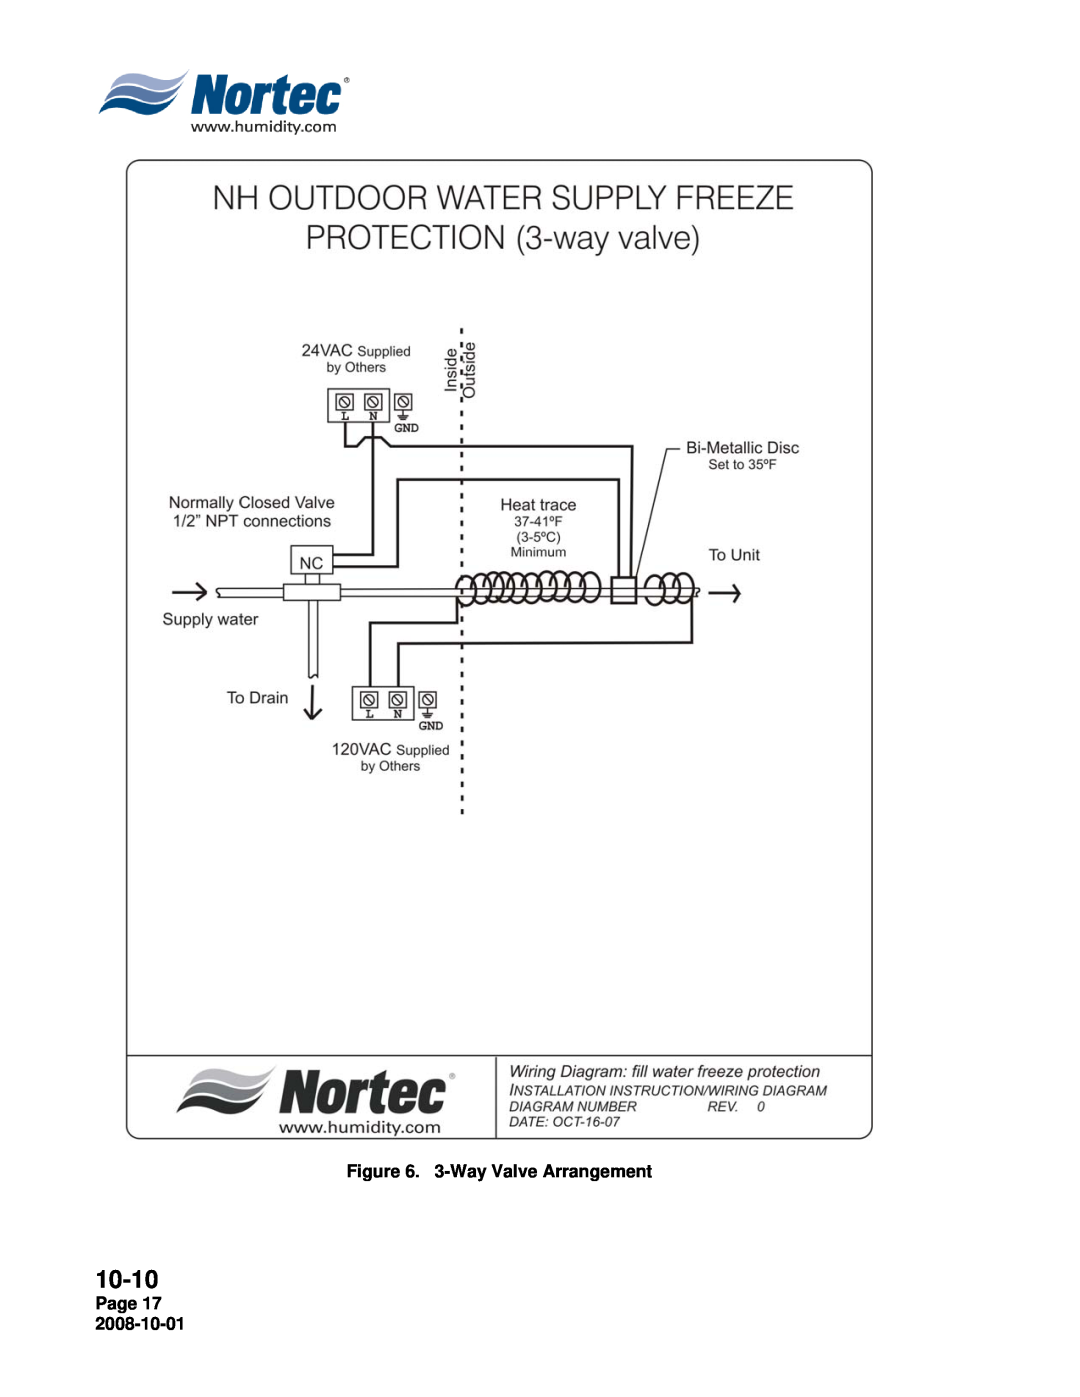 Nortec Industries NH Series installation manual 10-10, 3-WayValve Arrangement, Page 